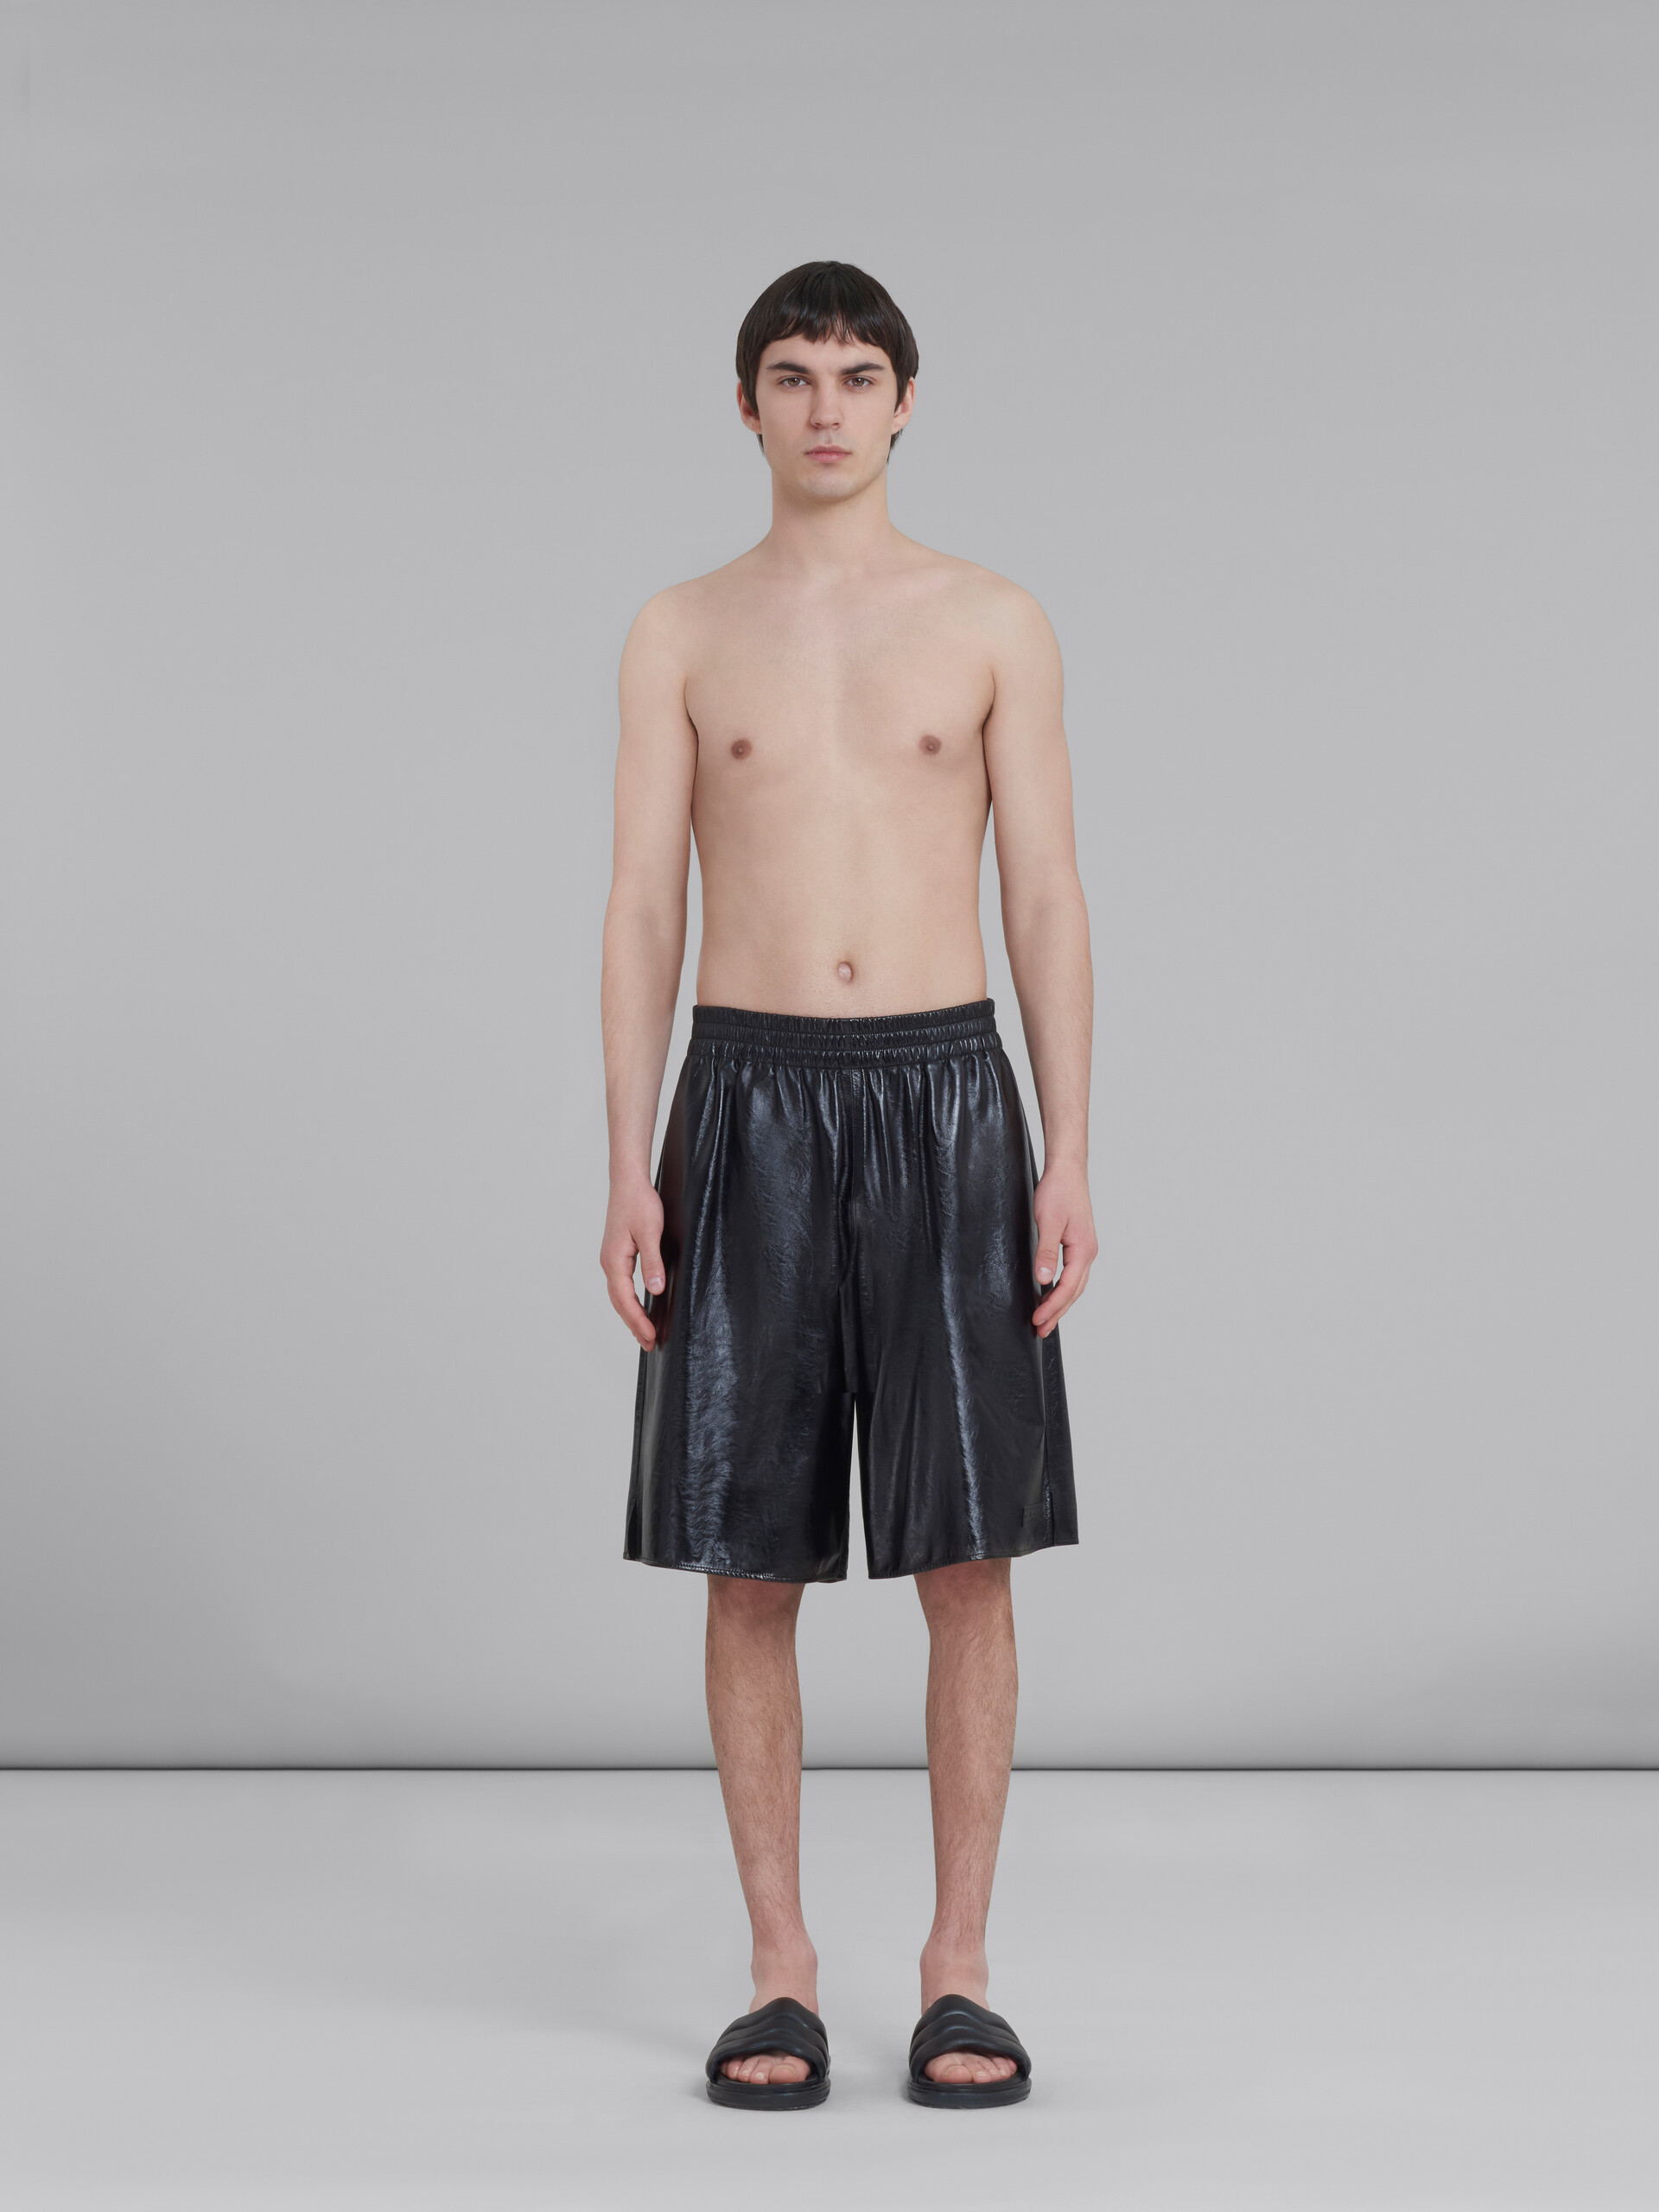 Black bermuda shorts in ultralight naplak leather - Pants - Image 2